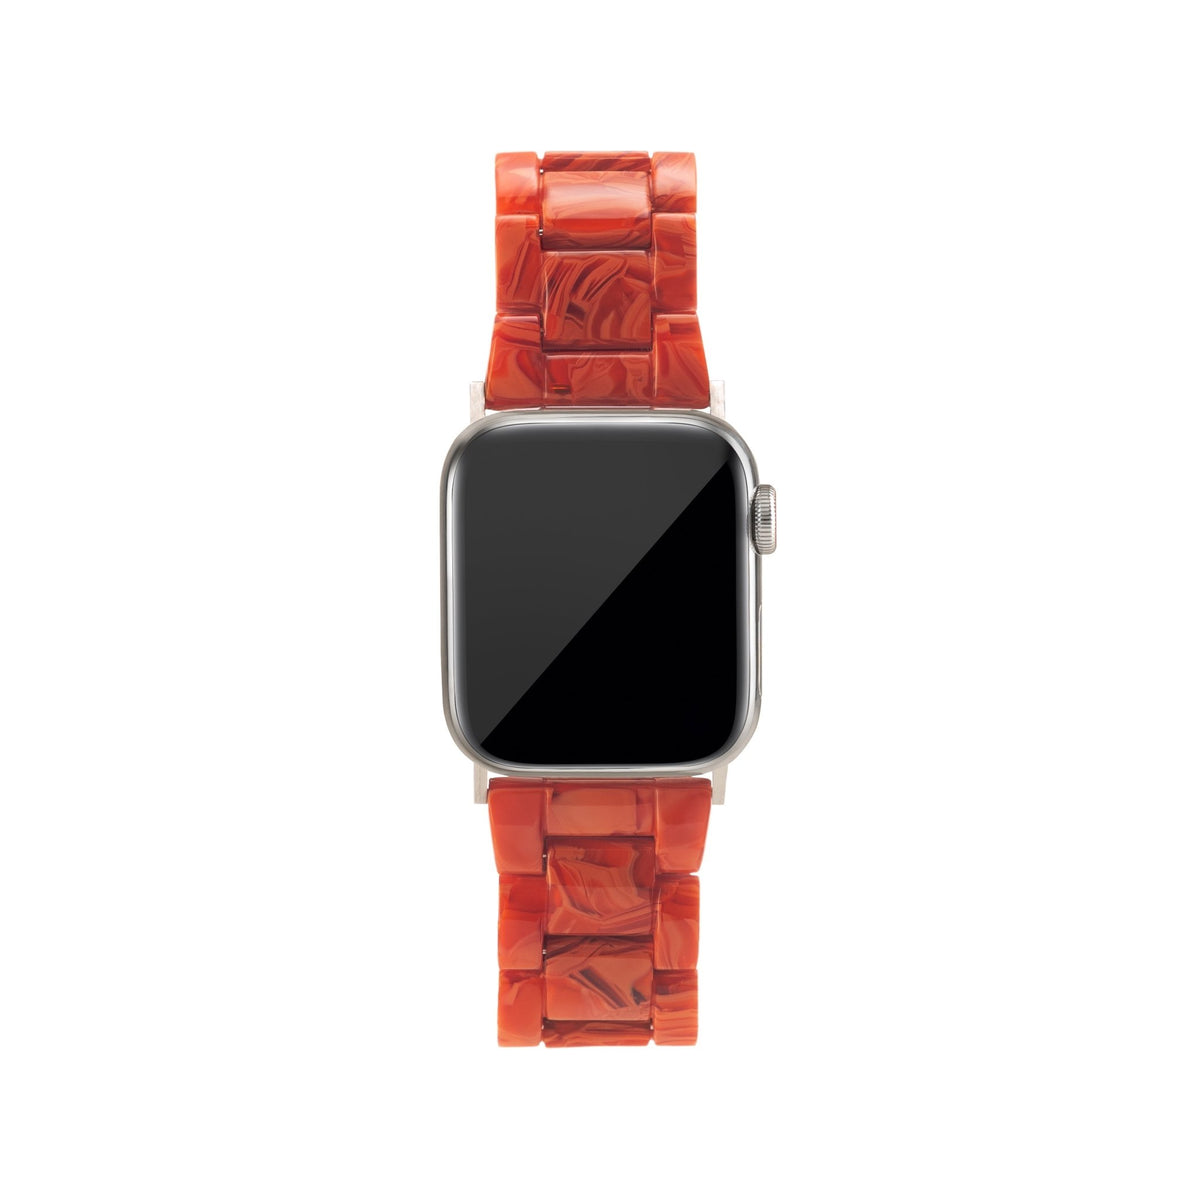 MACHETE Apple Watch Band in Poppy (Old Edition)